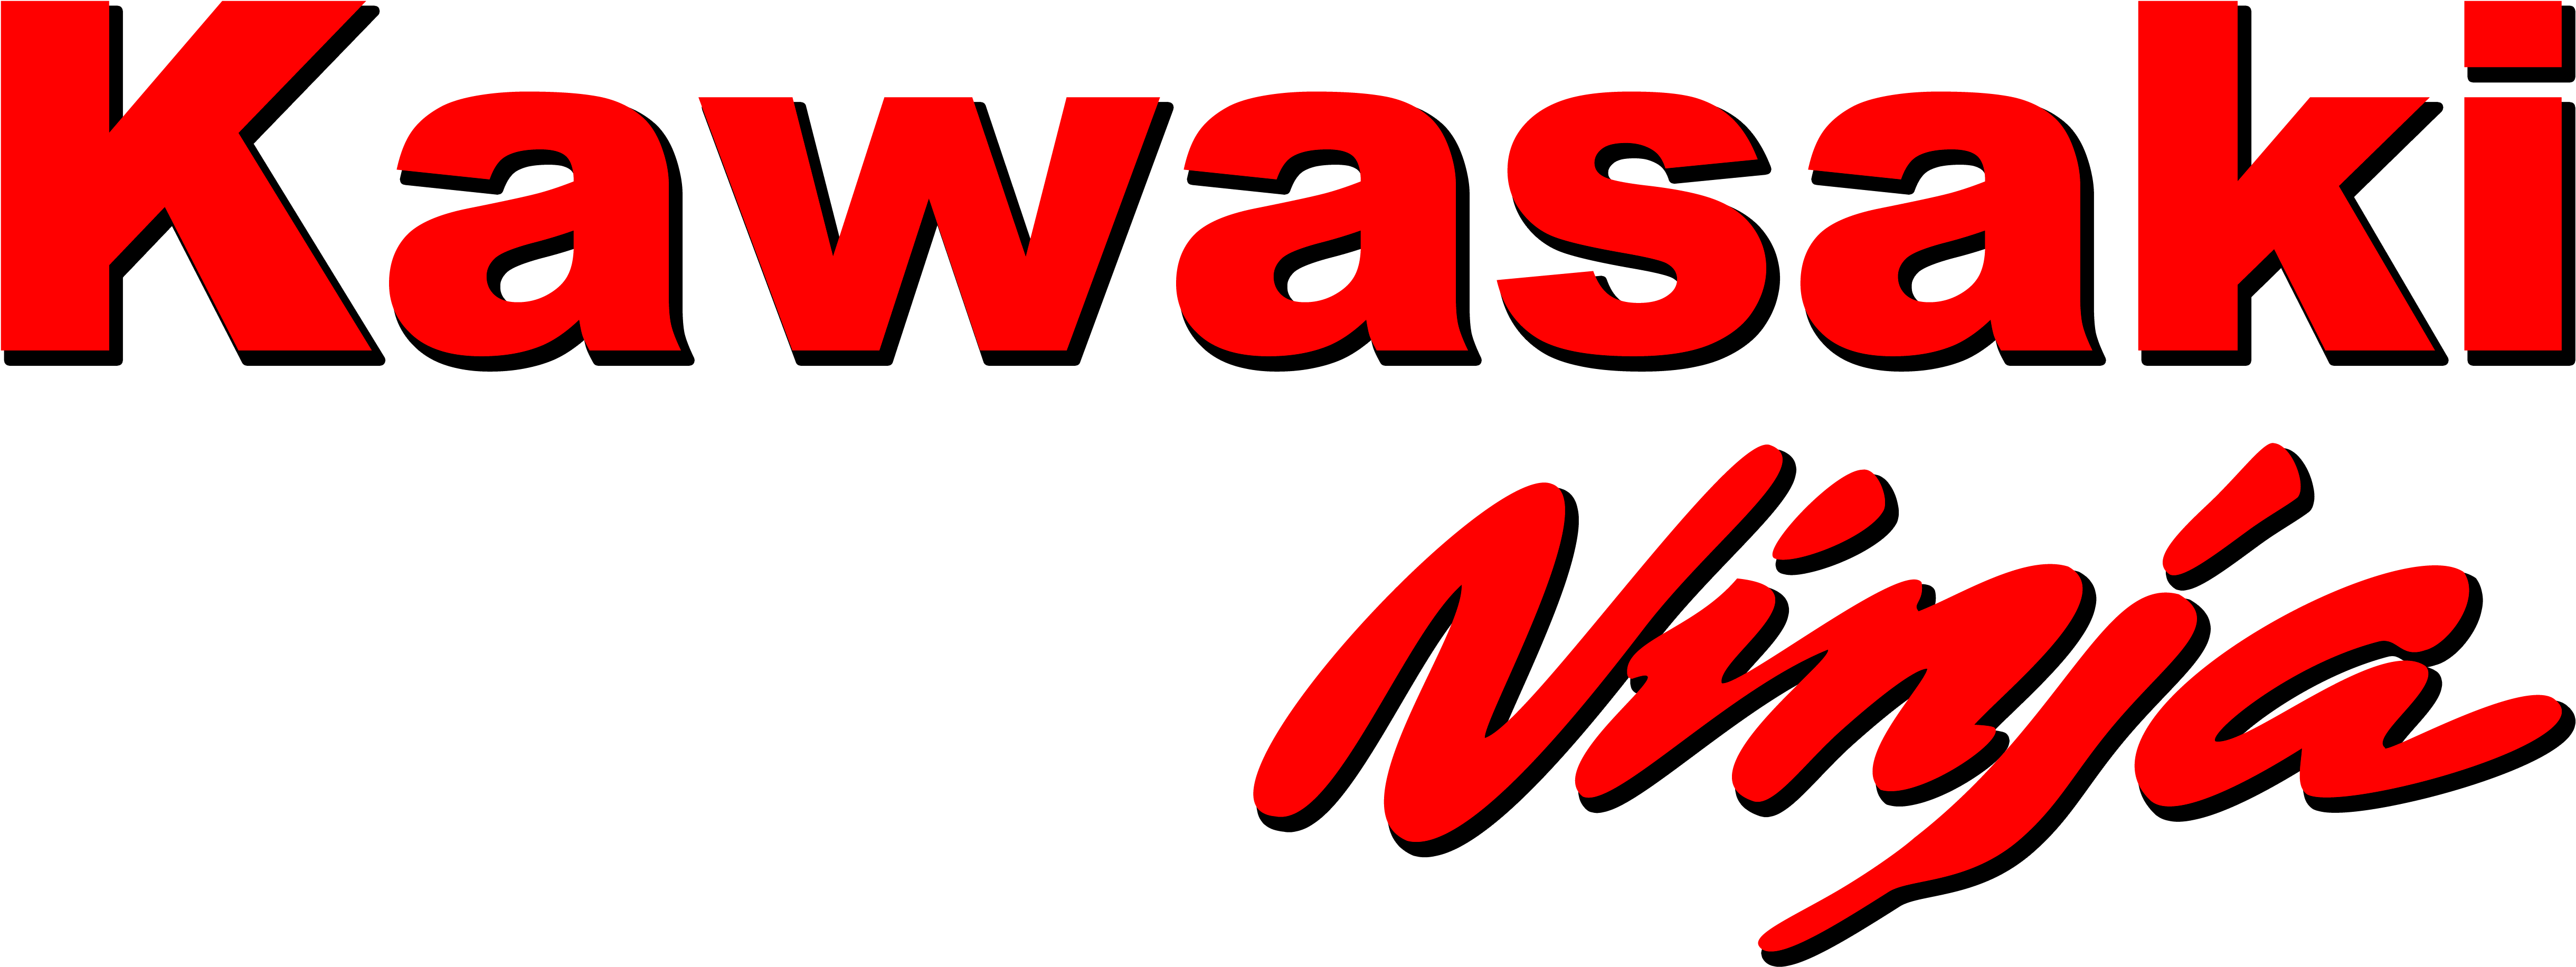 Kawasaki logo image Transparente